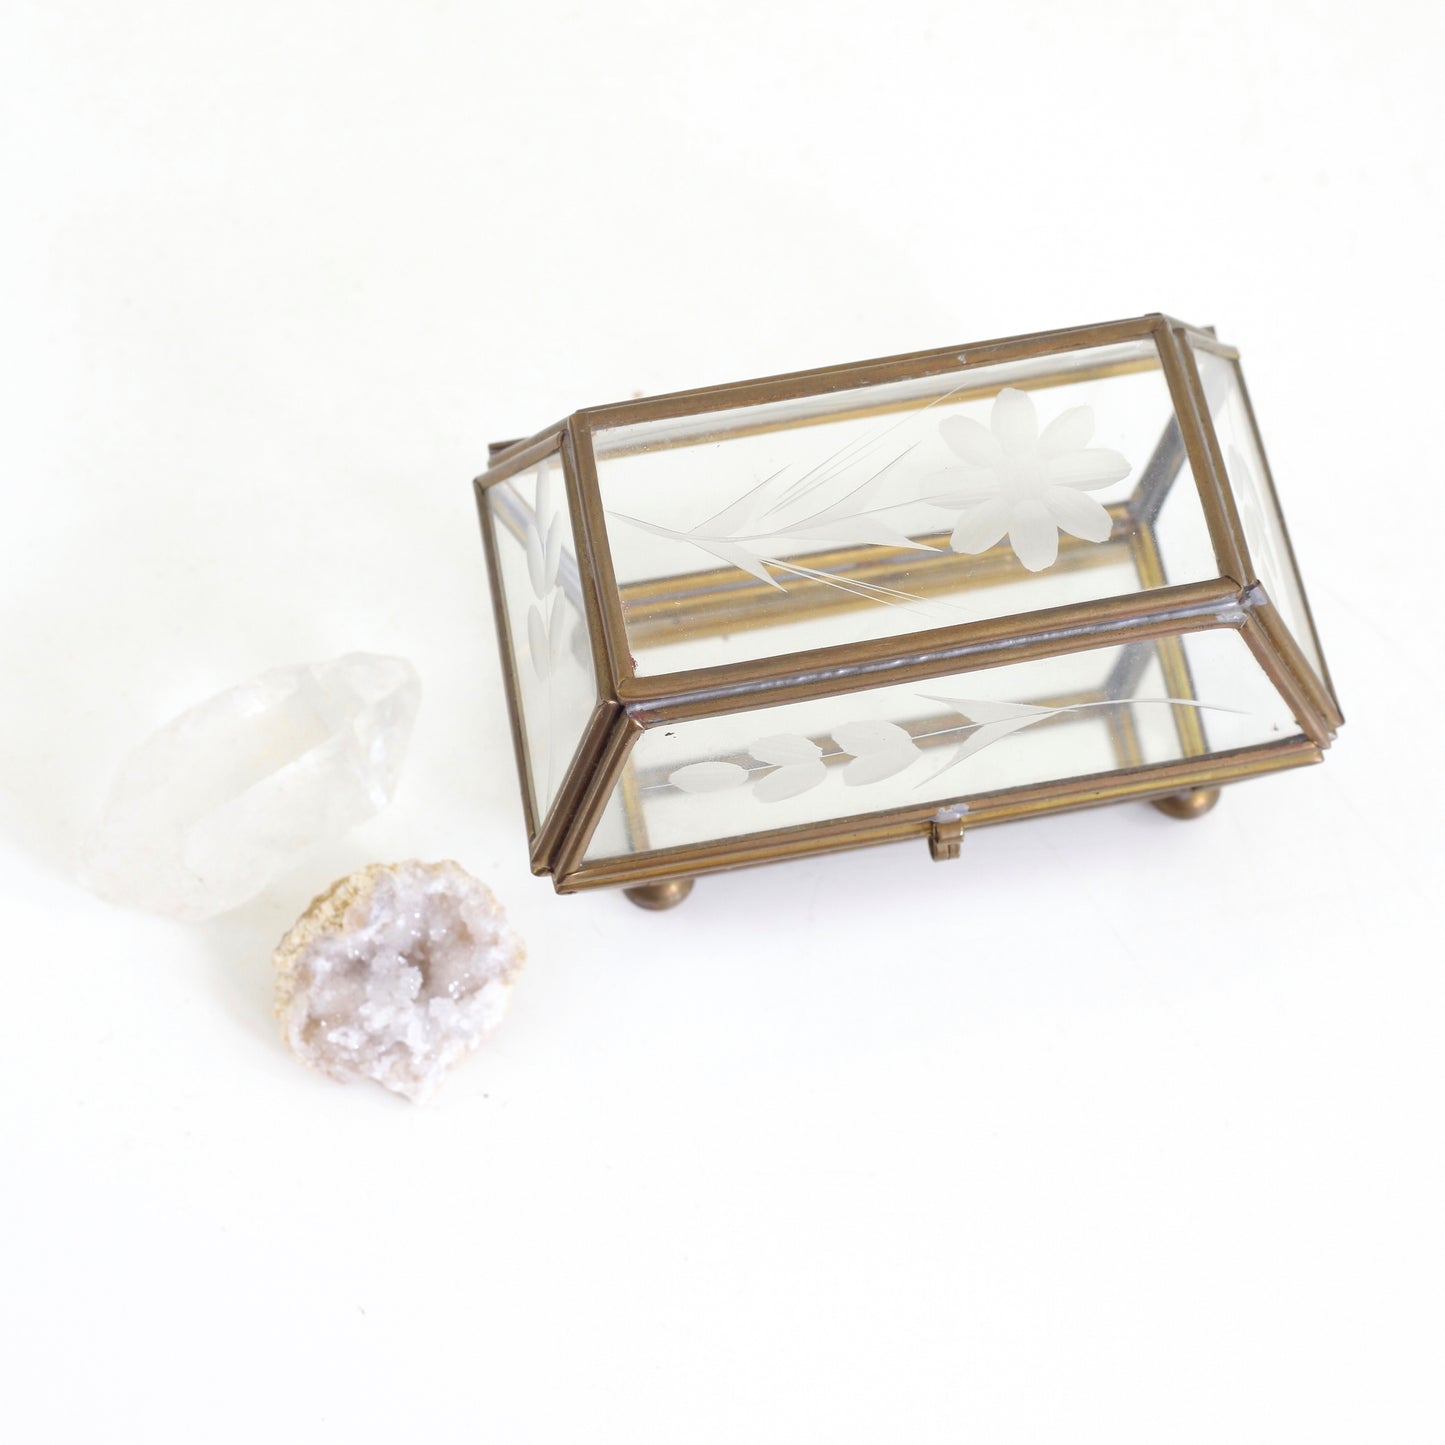 SOLD - Vintage Glass & Brass Trinket Box